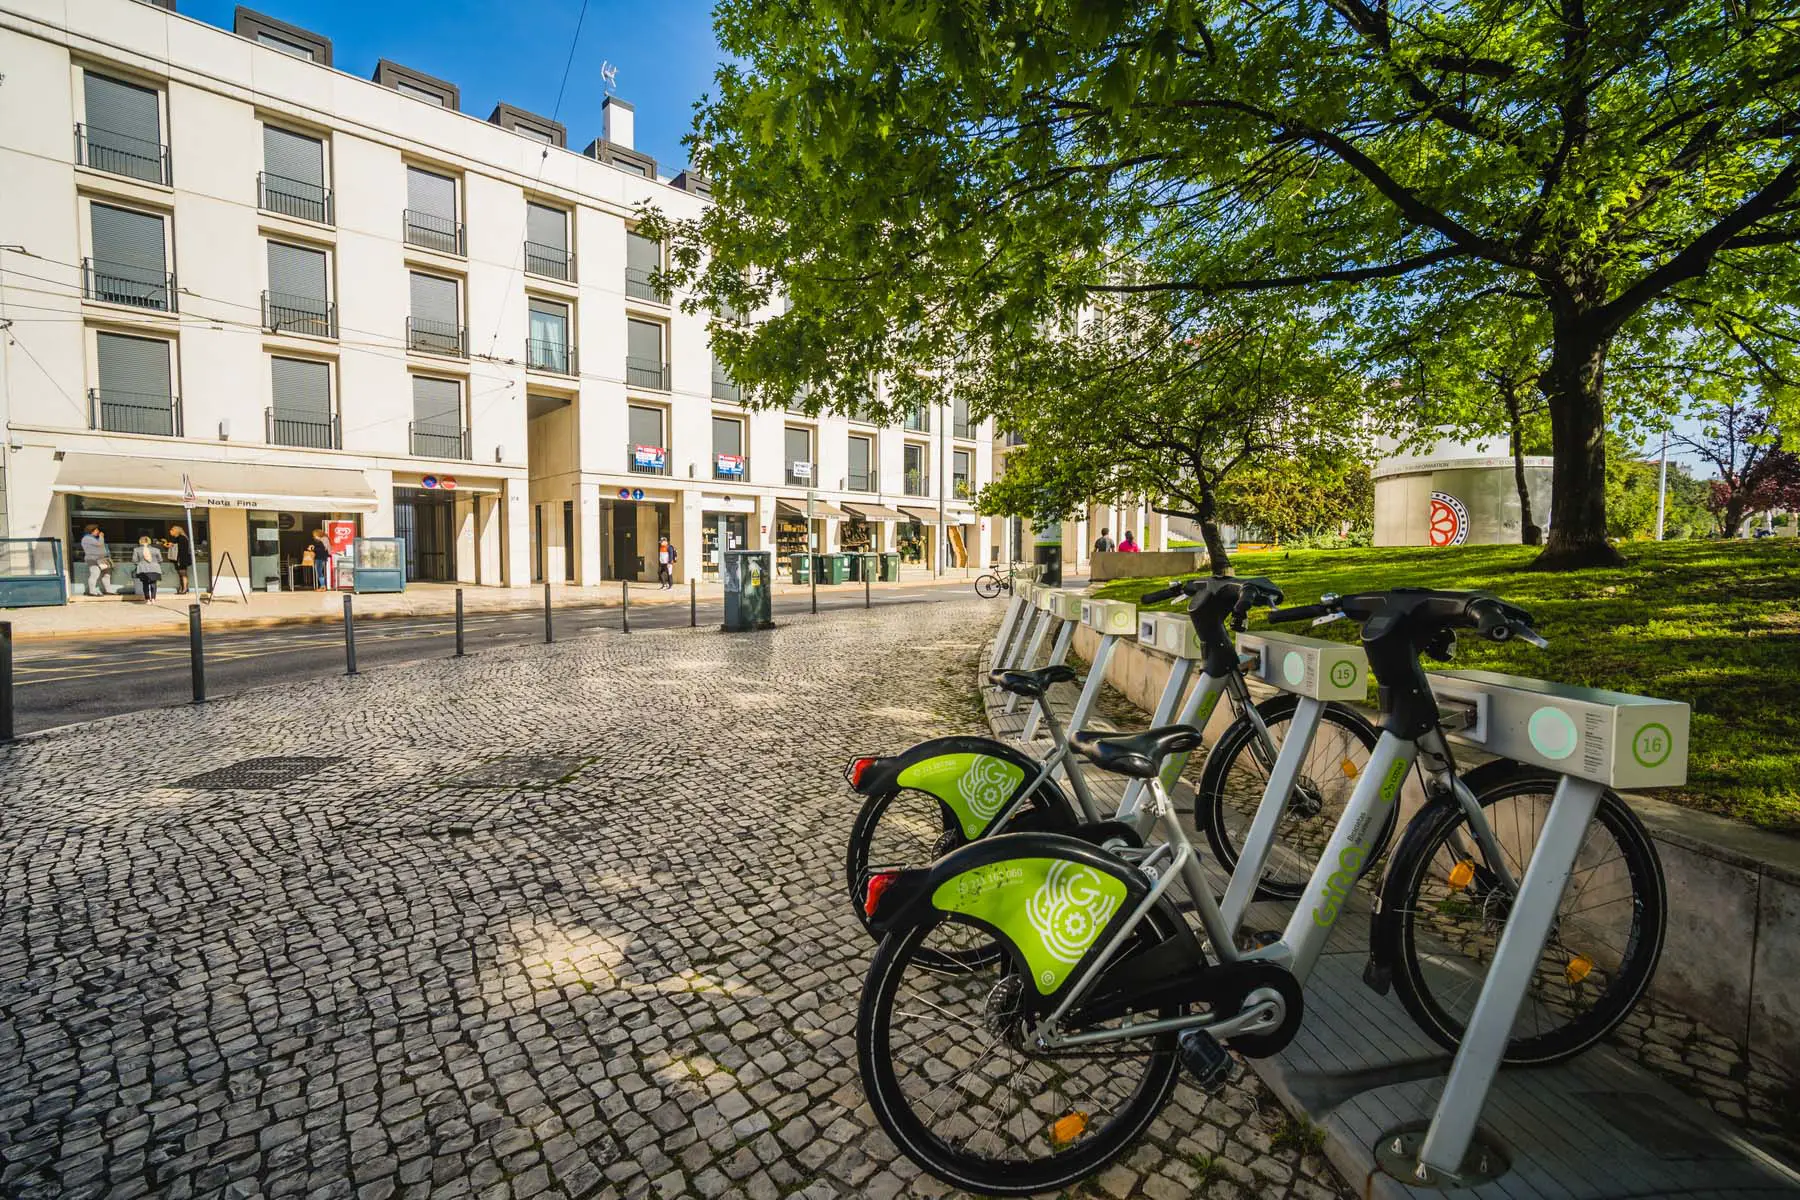 Shared bikes in Lisbon, Portugal